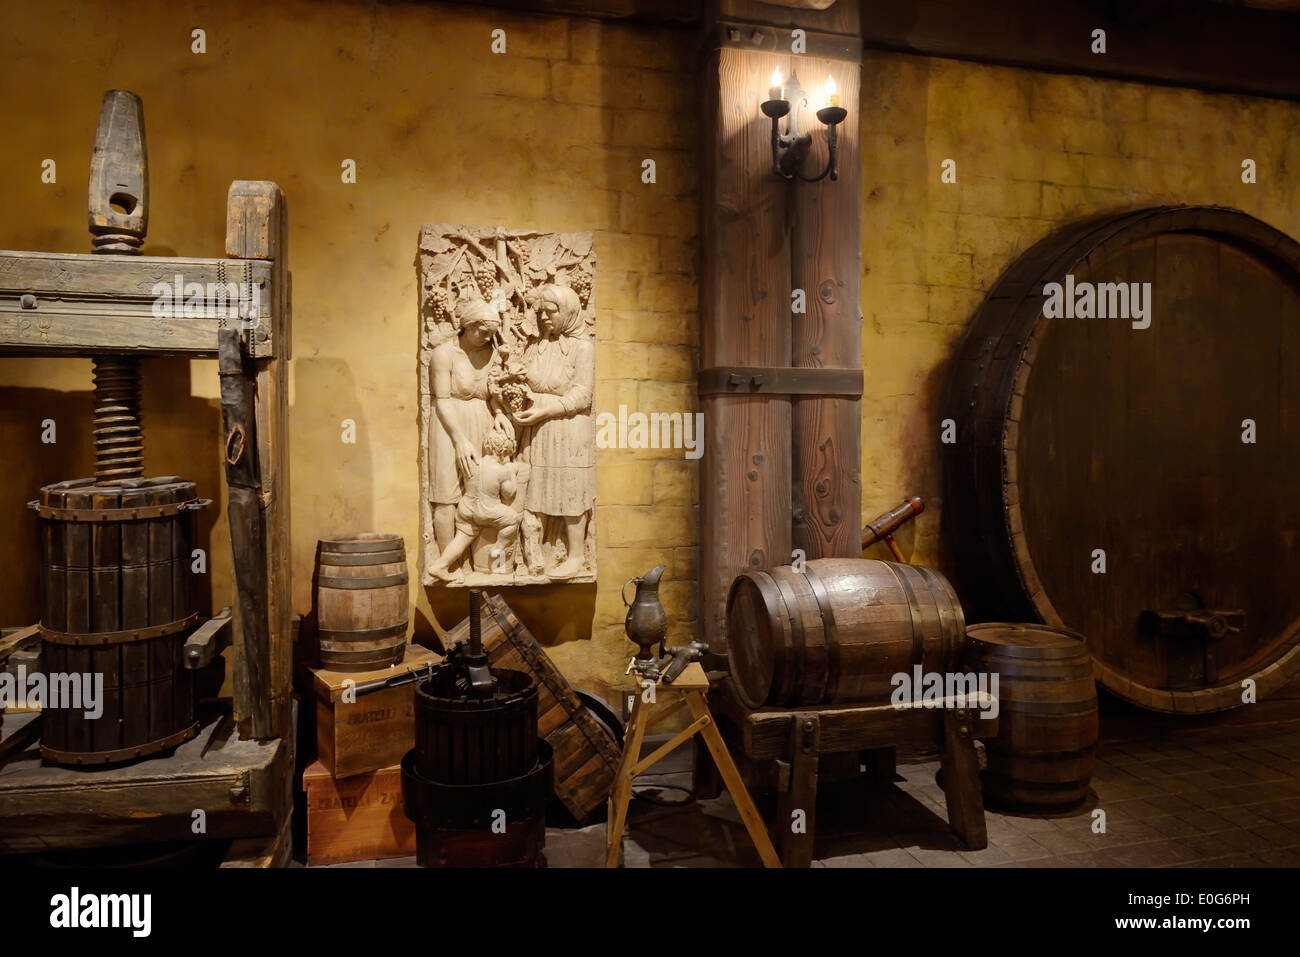 Italian winemaking tools, presses, barrels Stock Photo